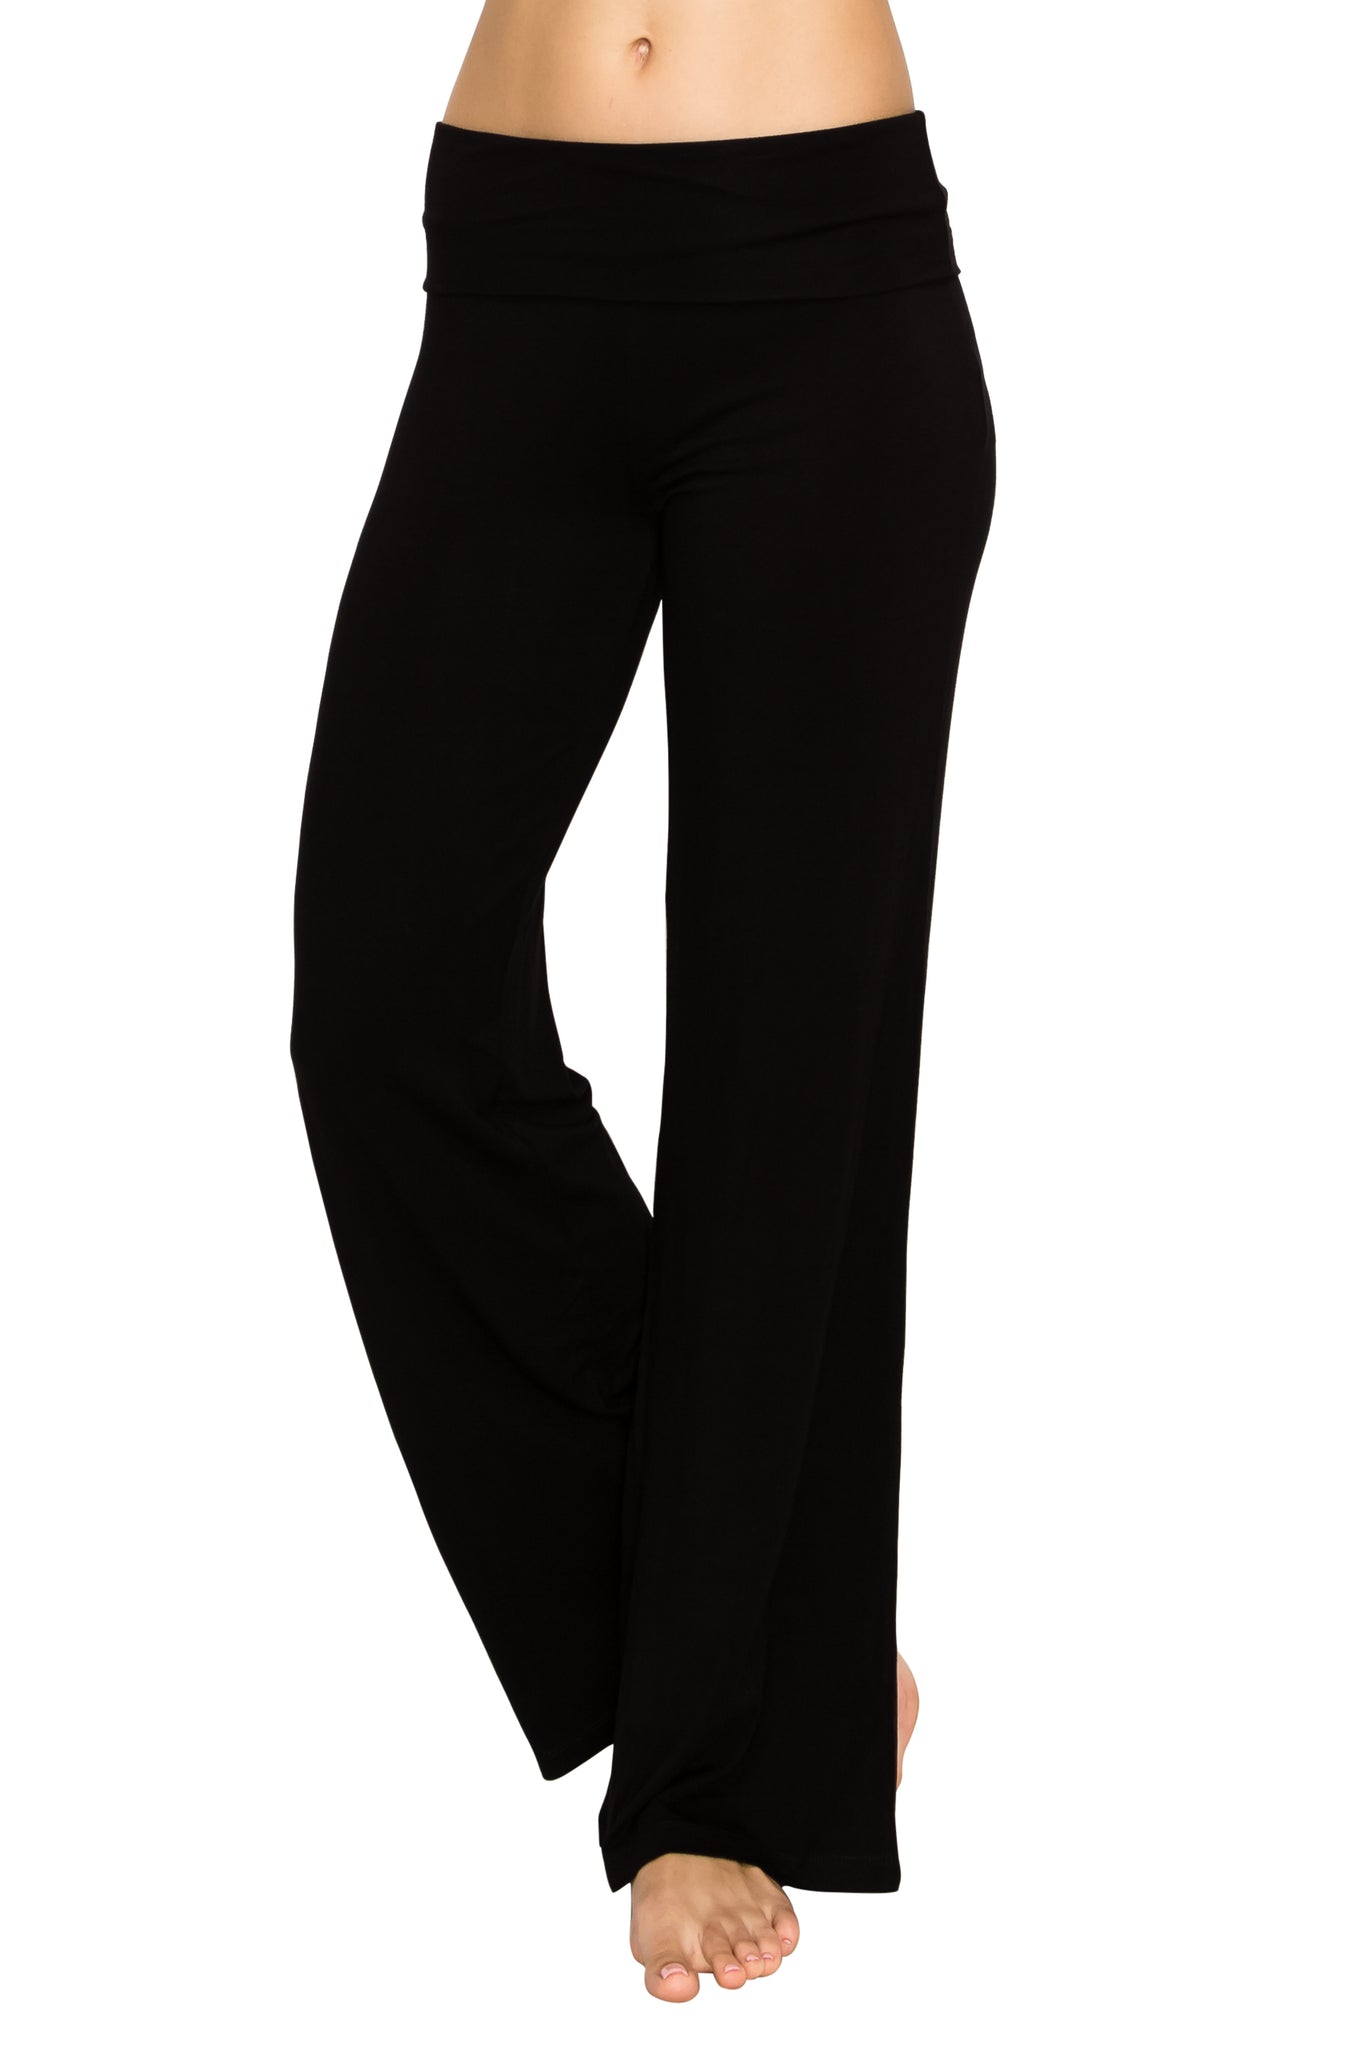 Black Foldover Yoga Pants – Poplooks